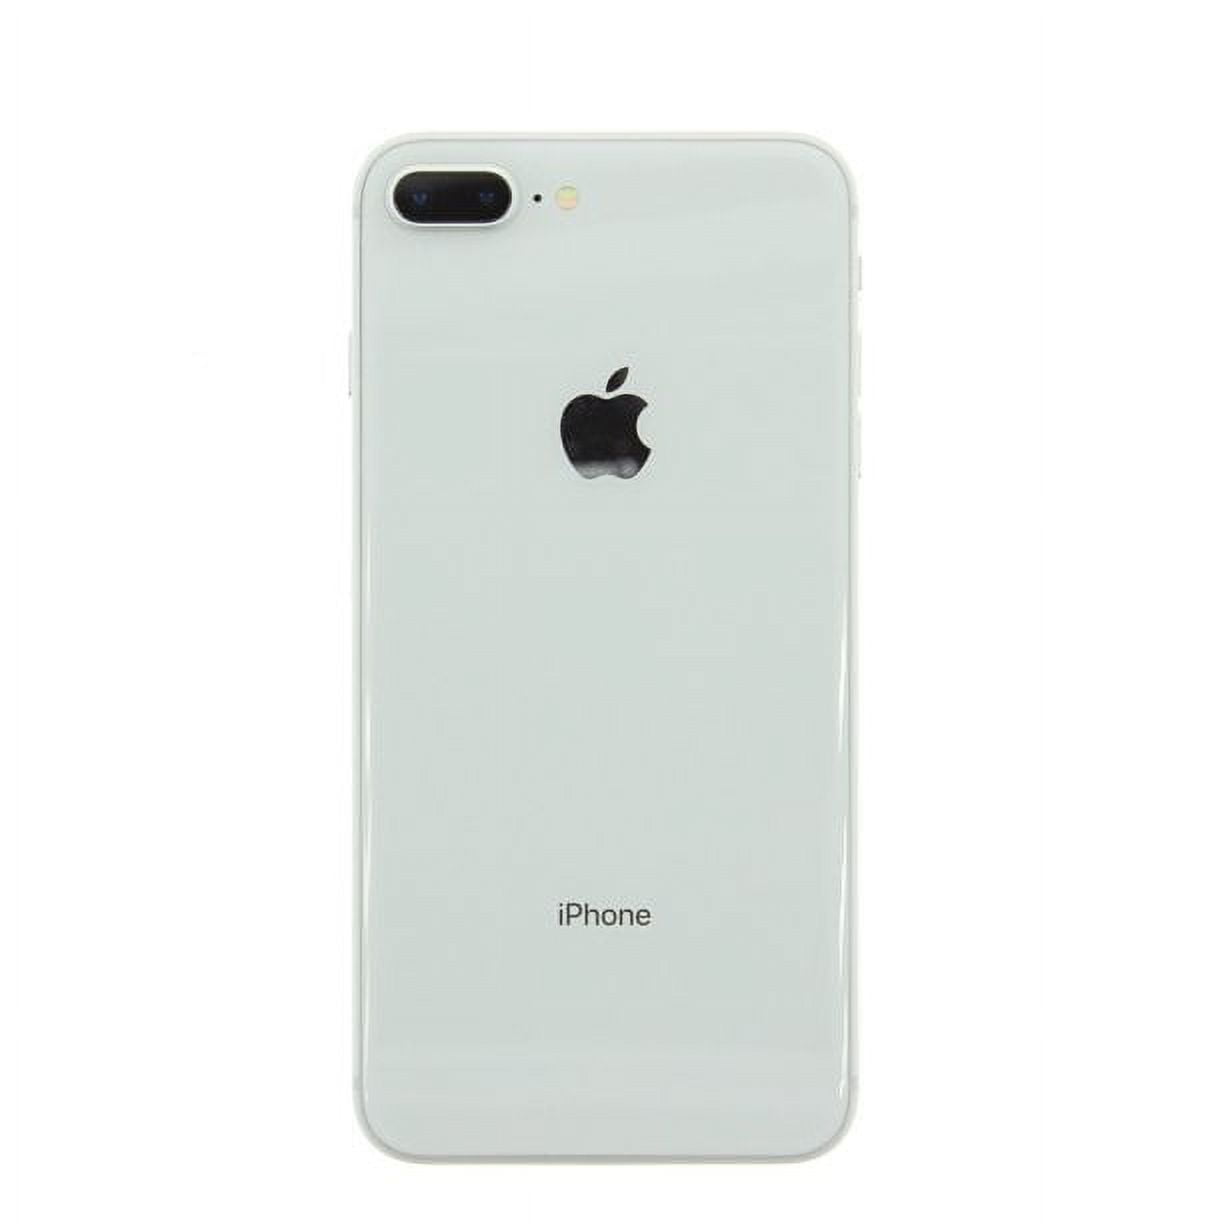 Restored Apple iPhone 8 Plus 64GB, Silver - Unlocked GSM (Refurbished)